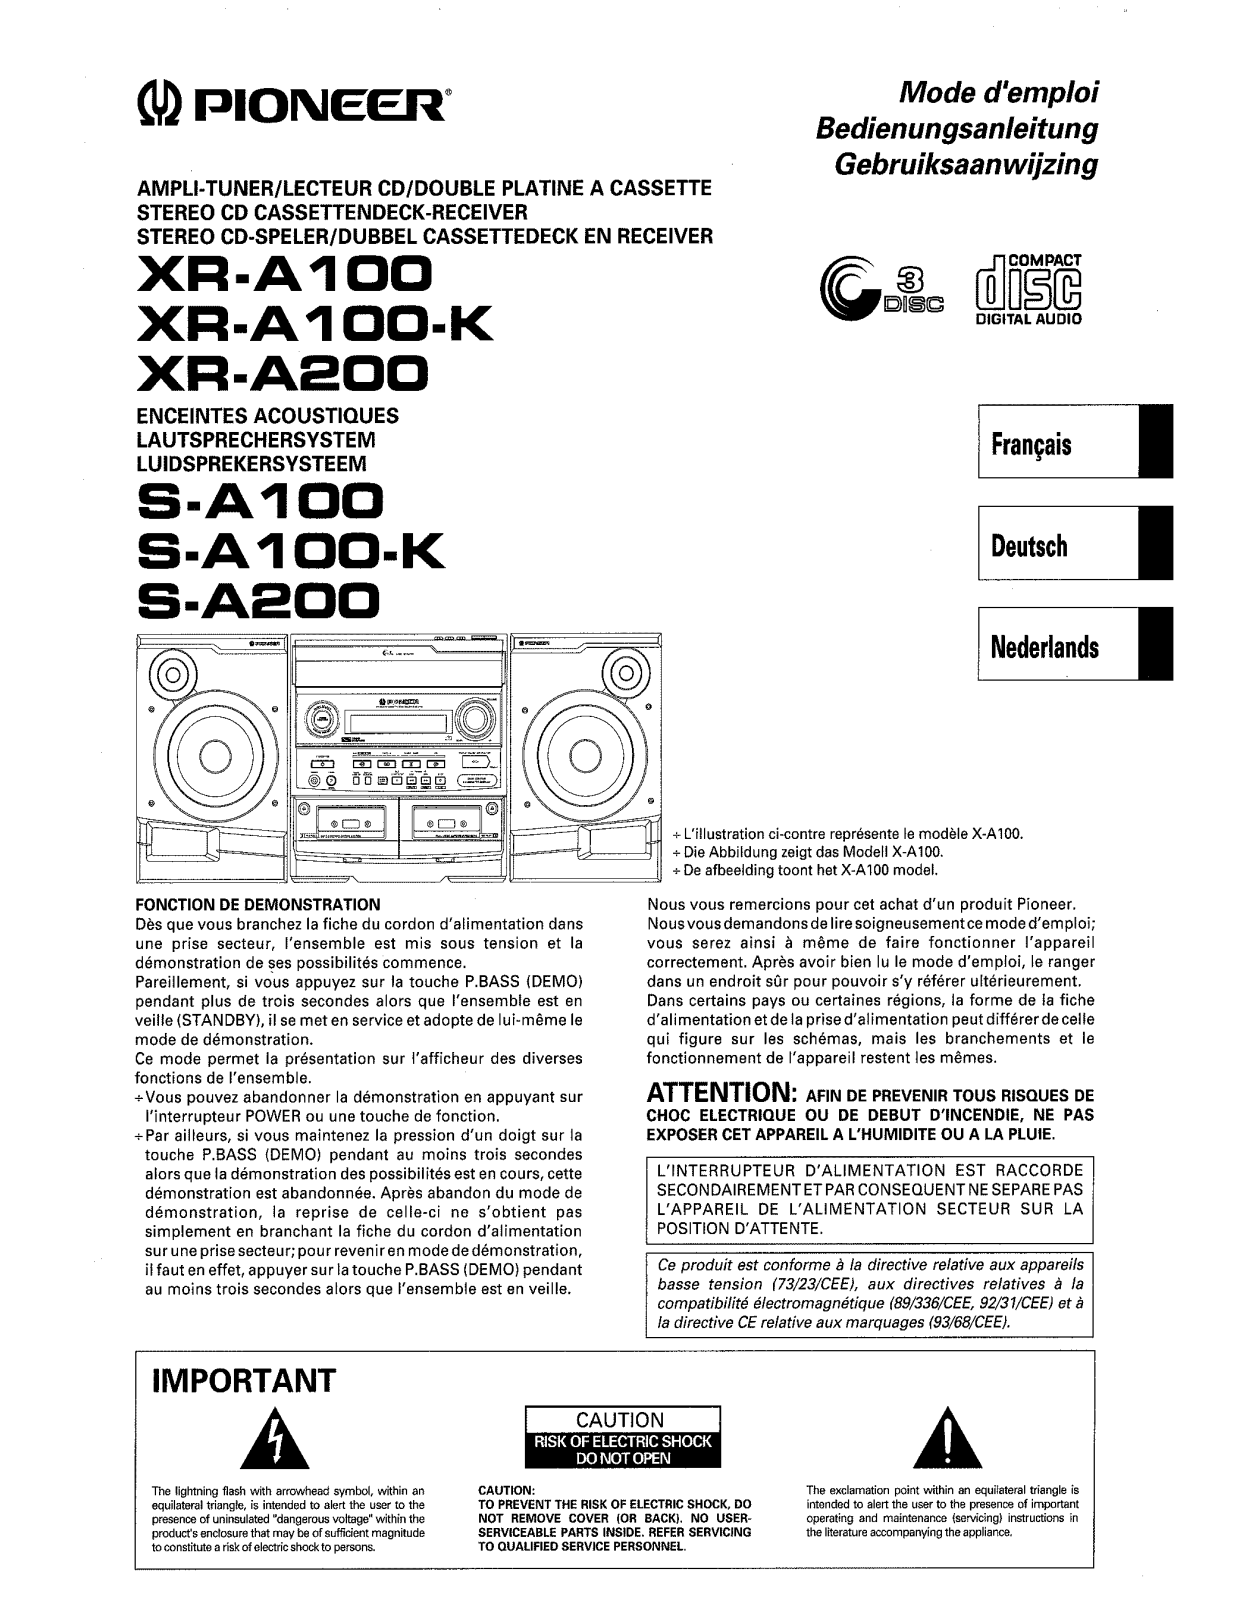 Pioneer S-A100 Manual